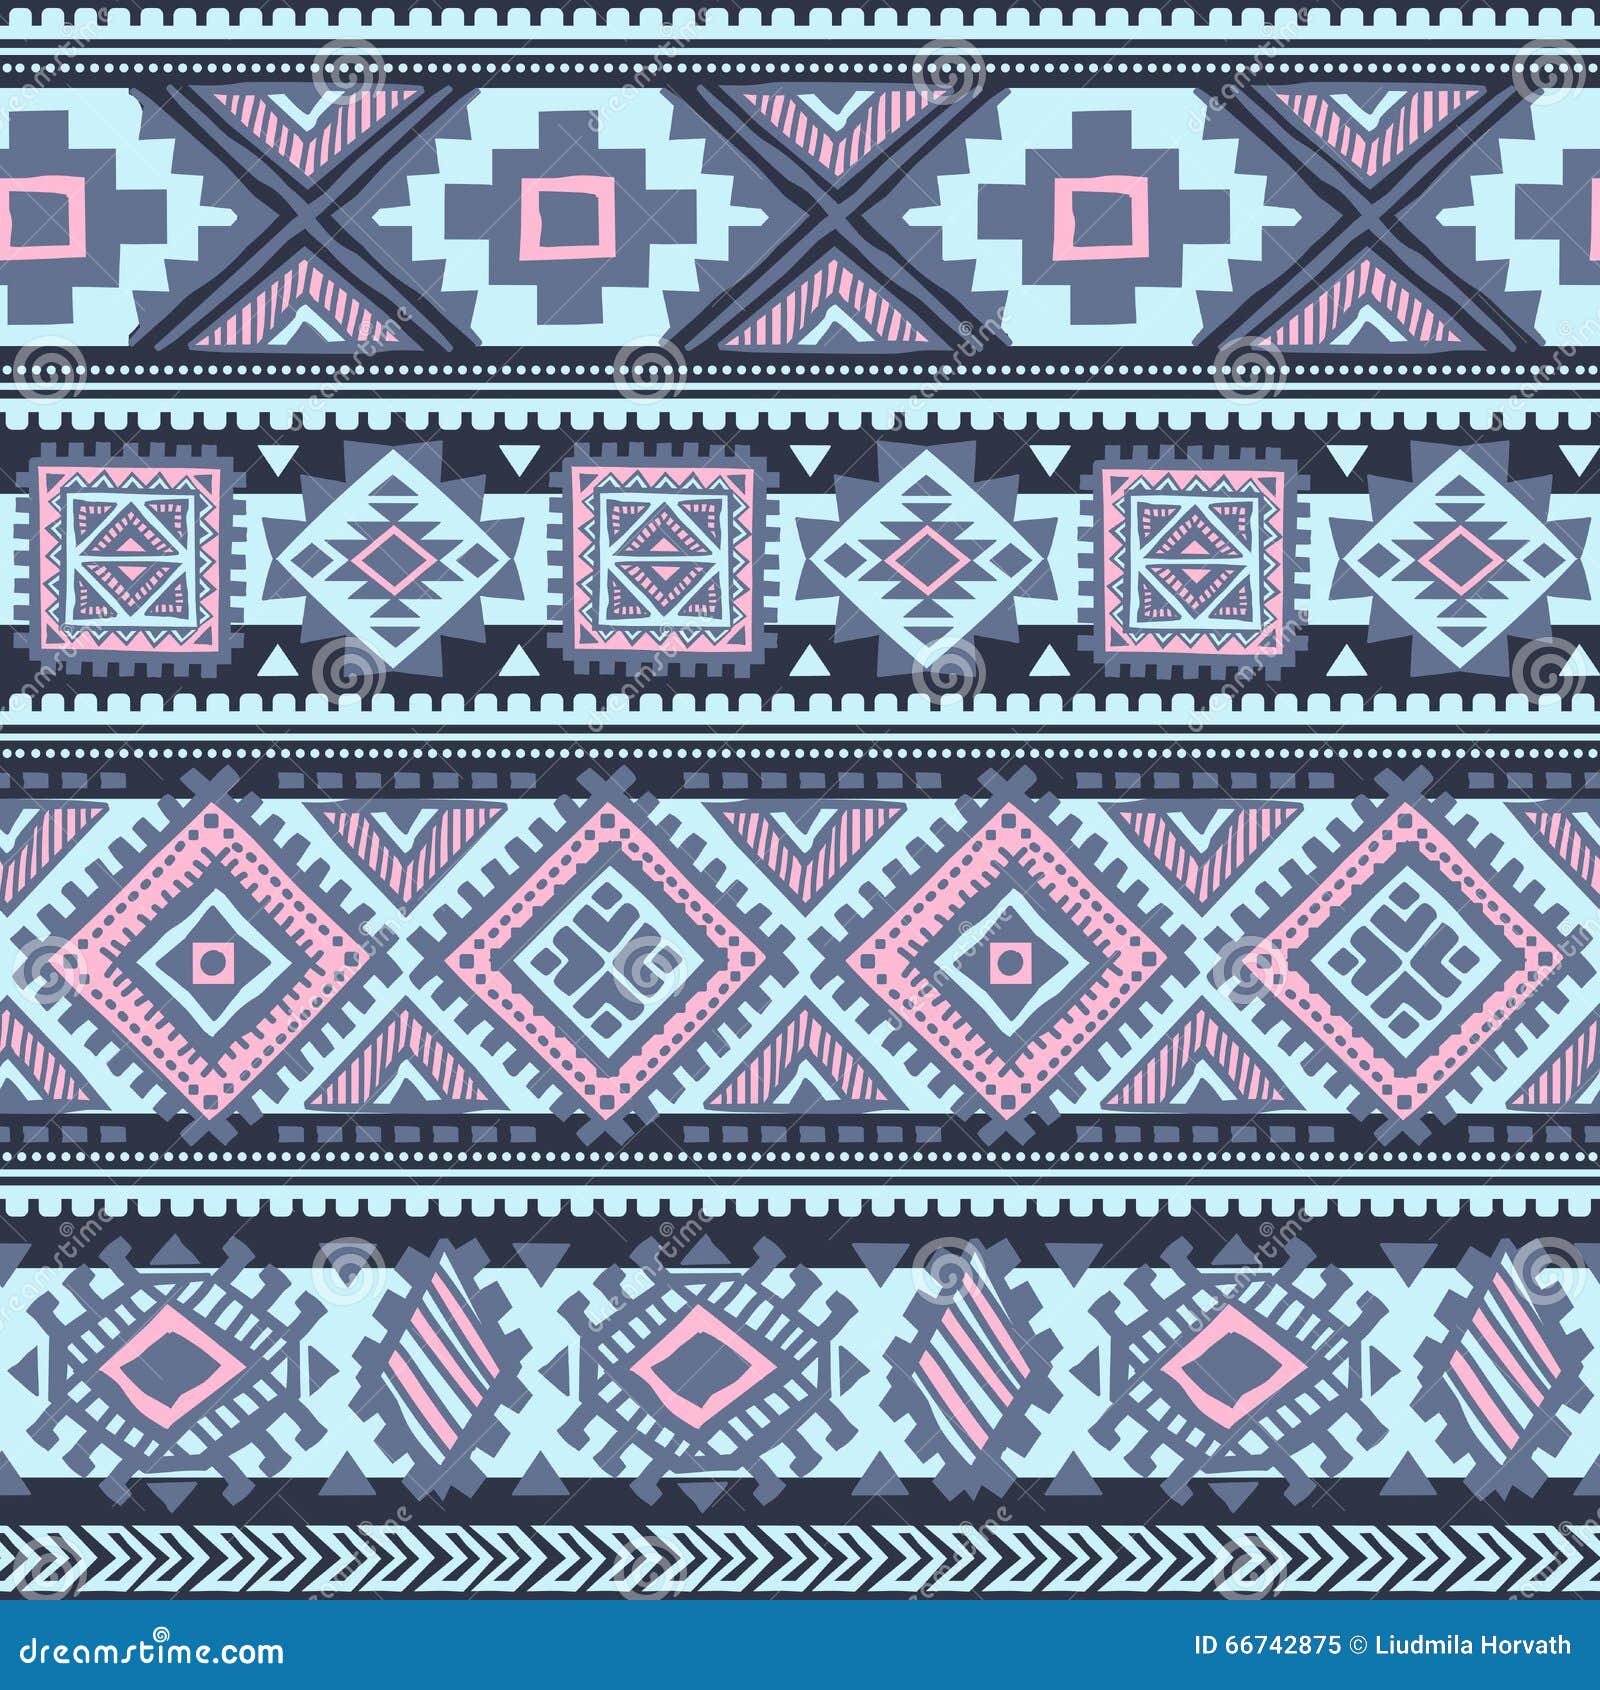 Tribal Aztec Vintage Seamless Pattern Stock Vector - Image: 66742875